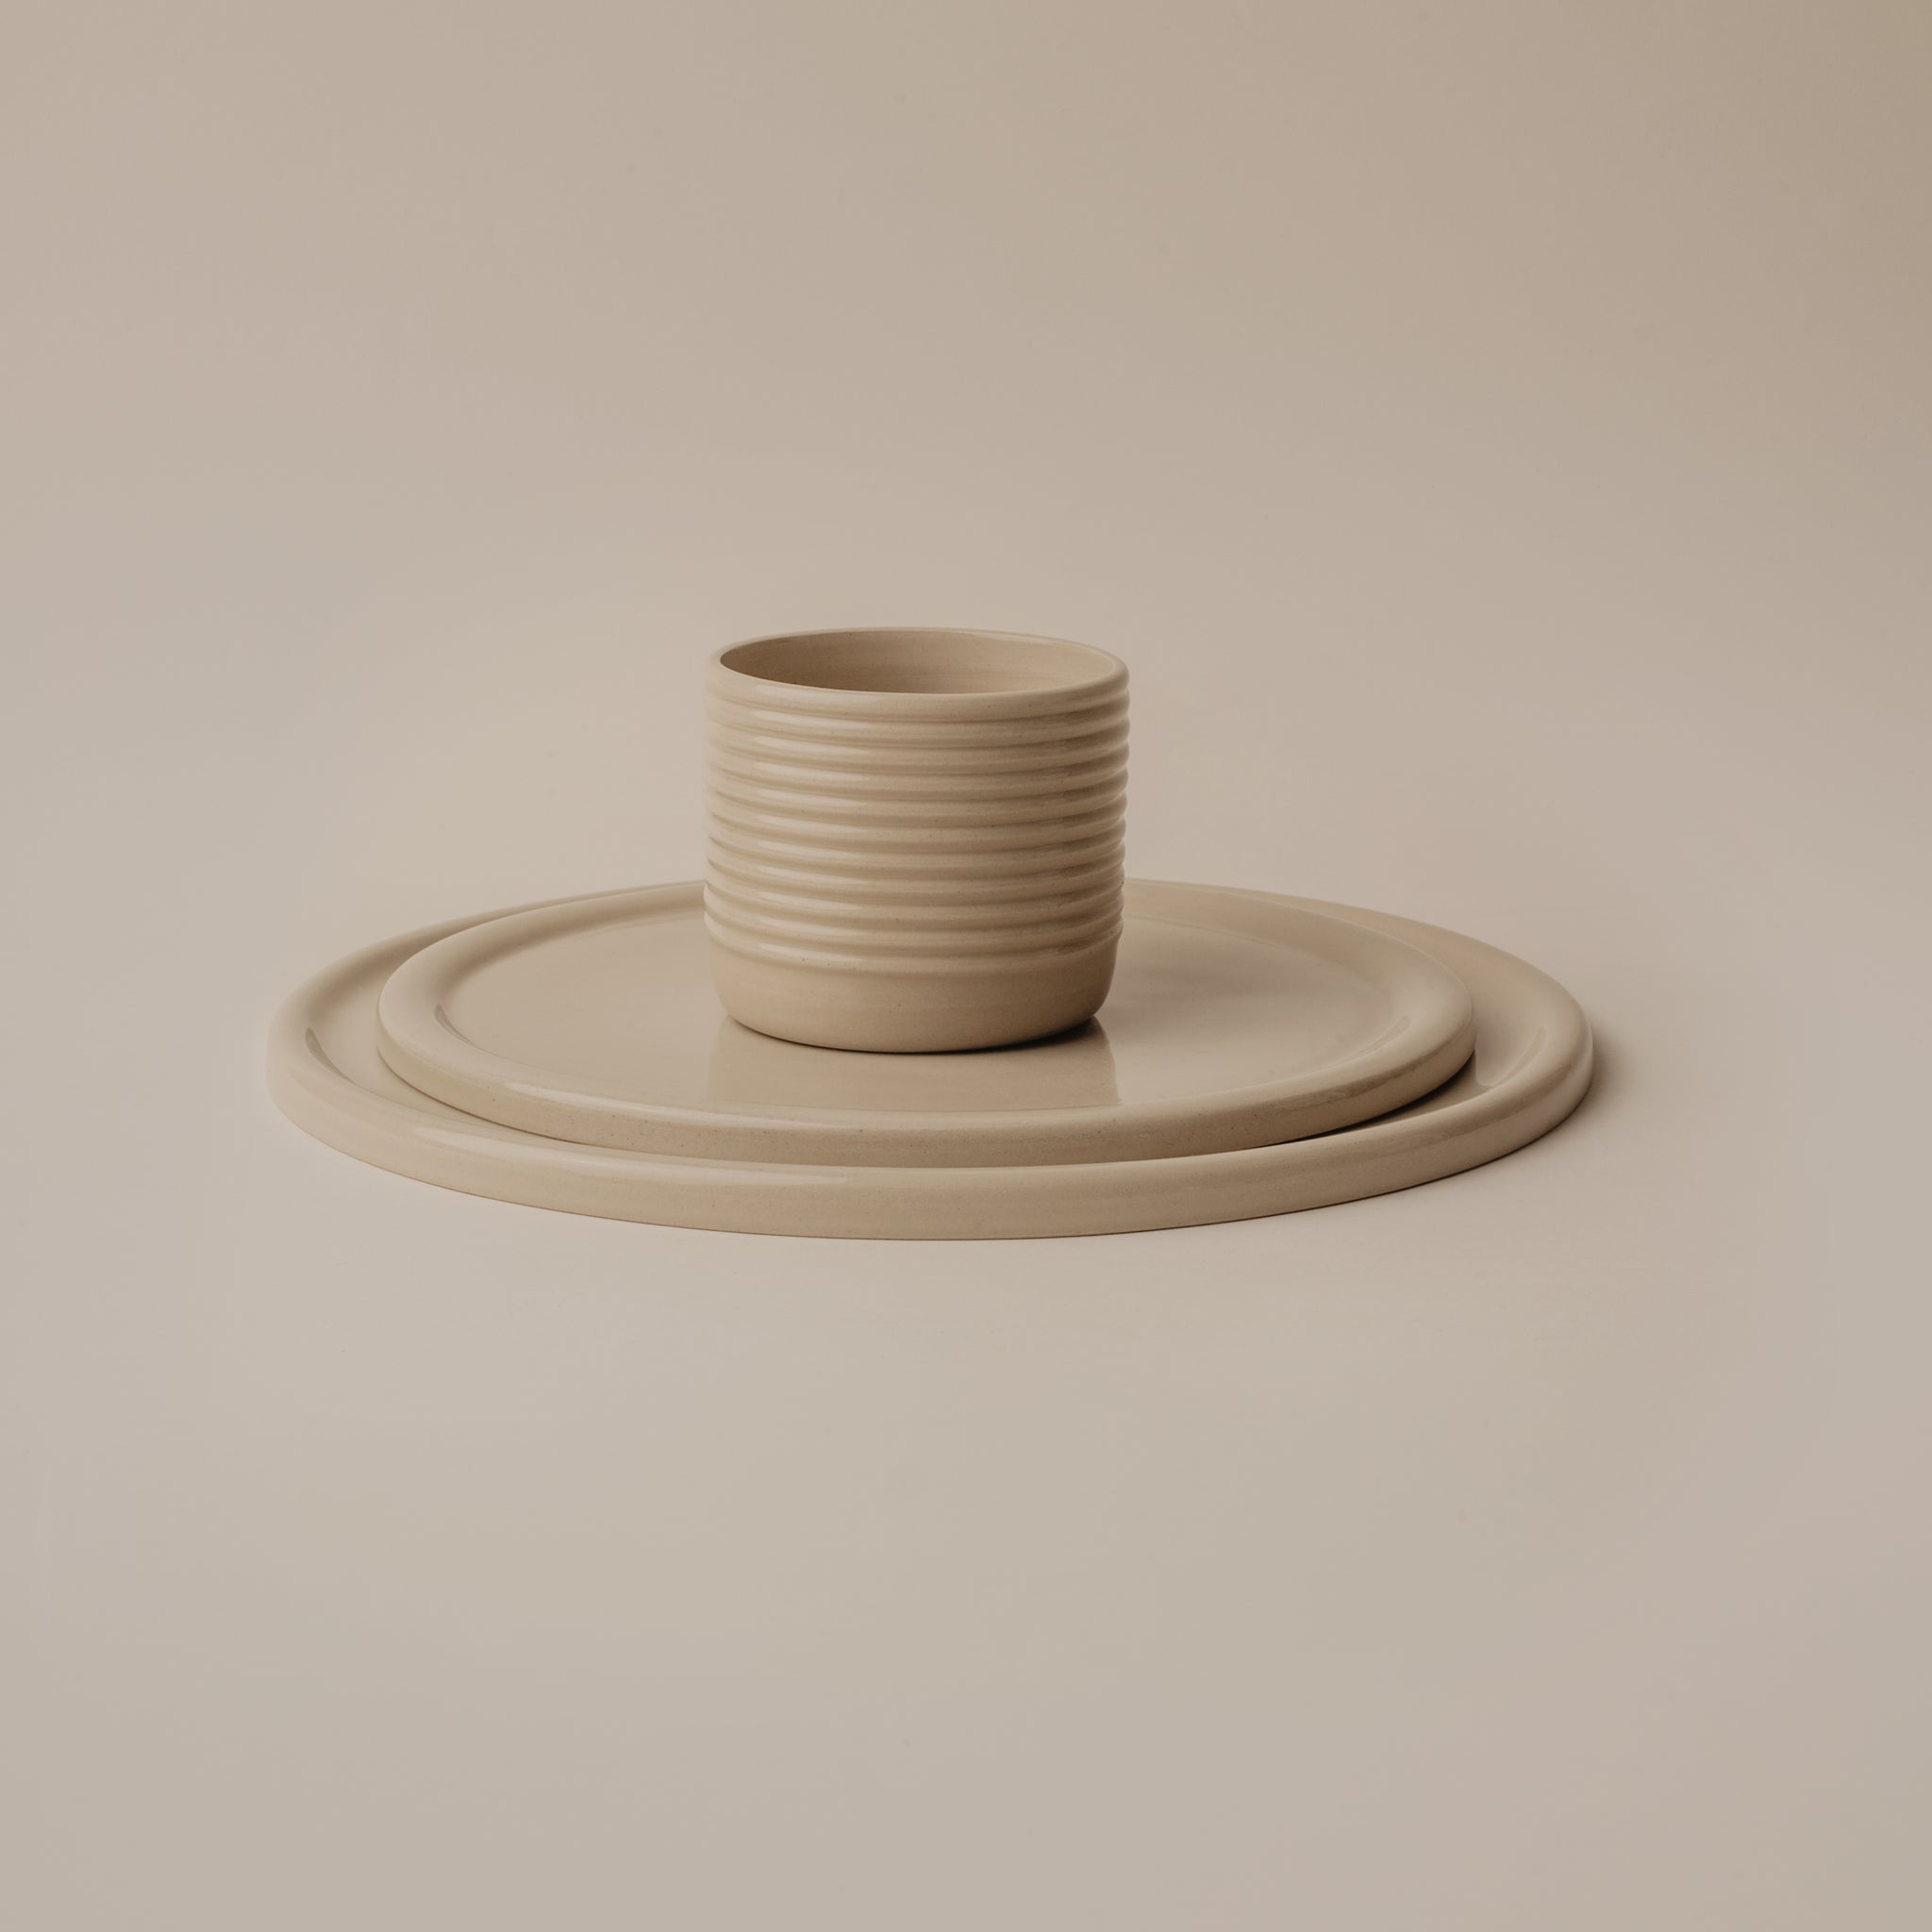 Handmade tableware claï studio ceramic atelier Berlin Prenzlauer Berg